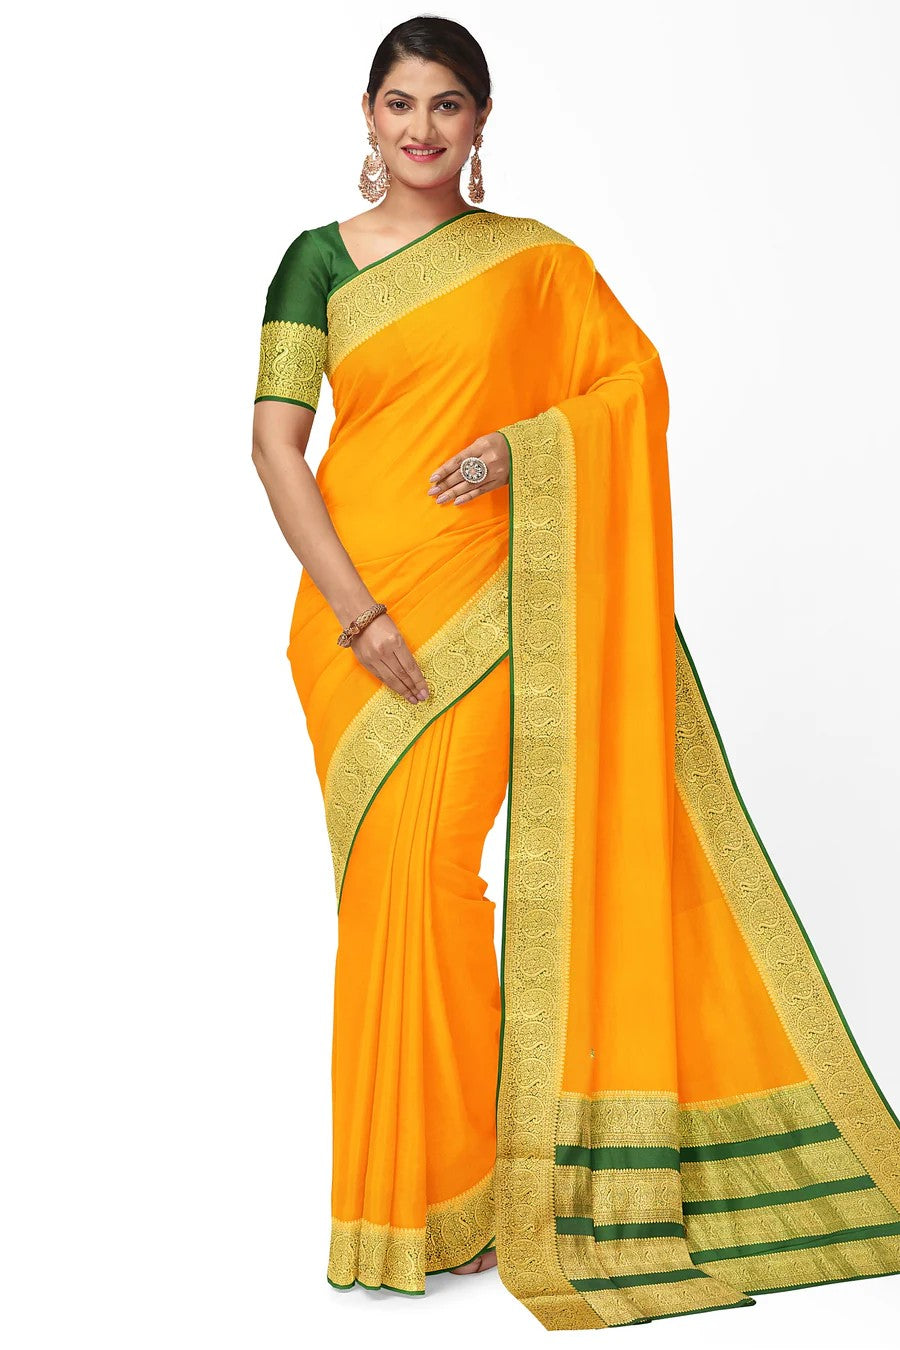 What makes Mysore silk sarees unique and distinctive?